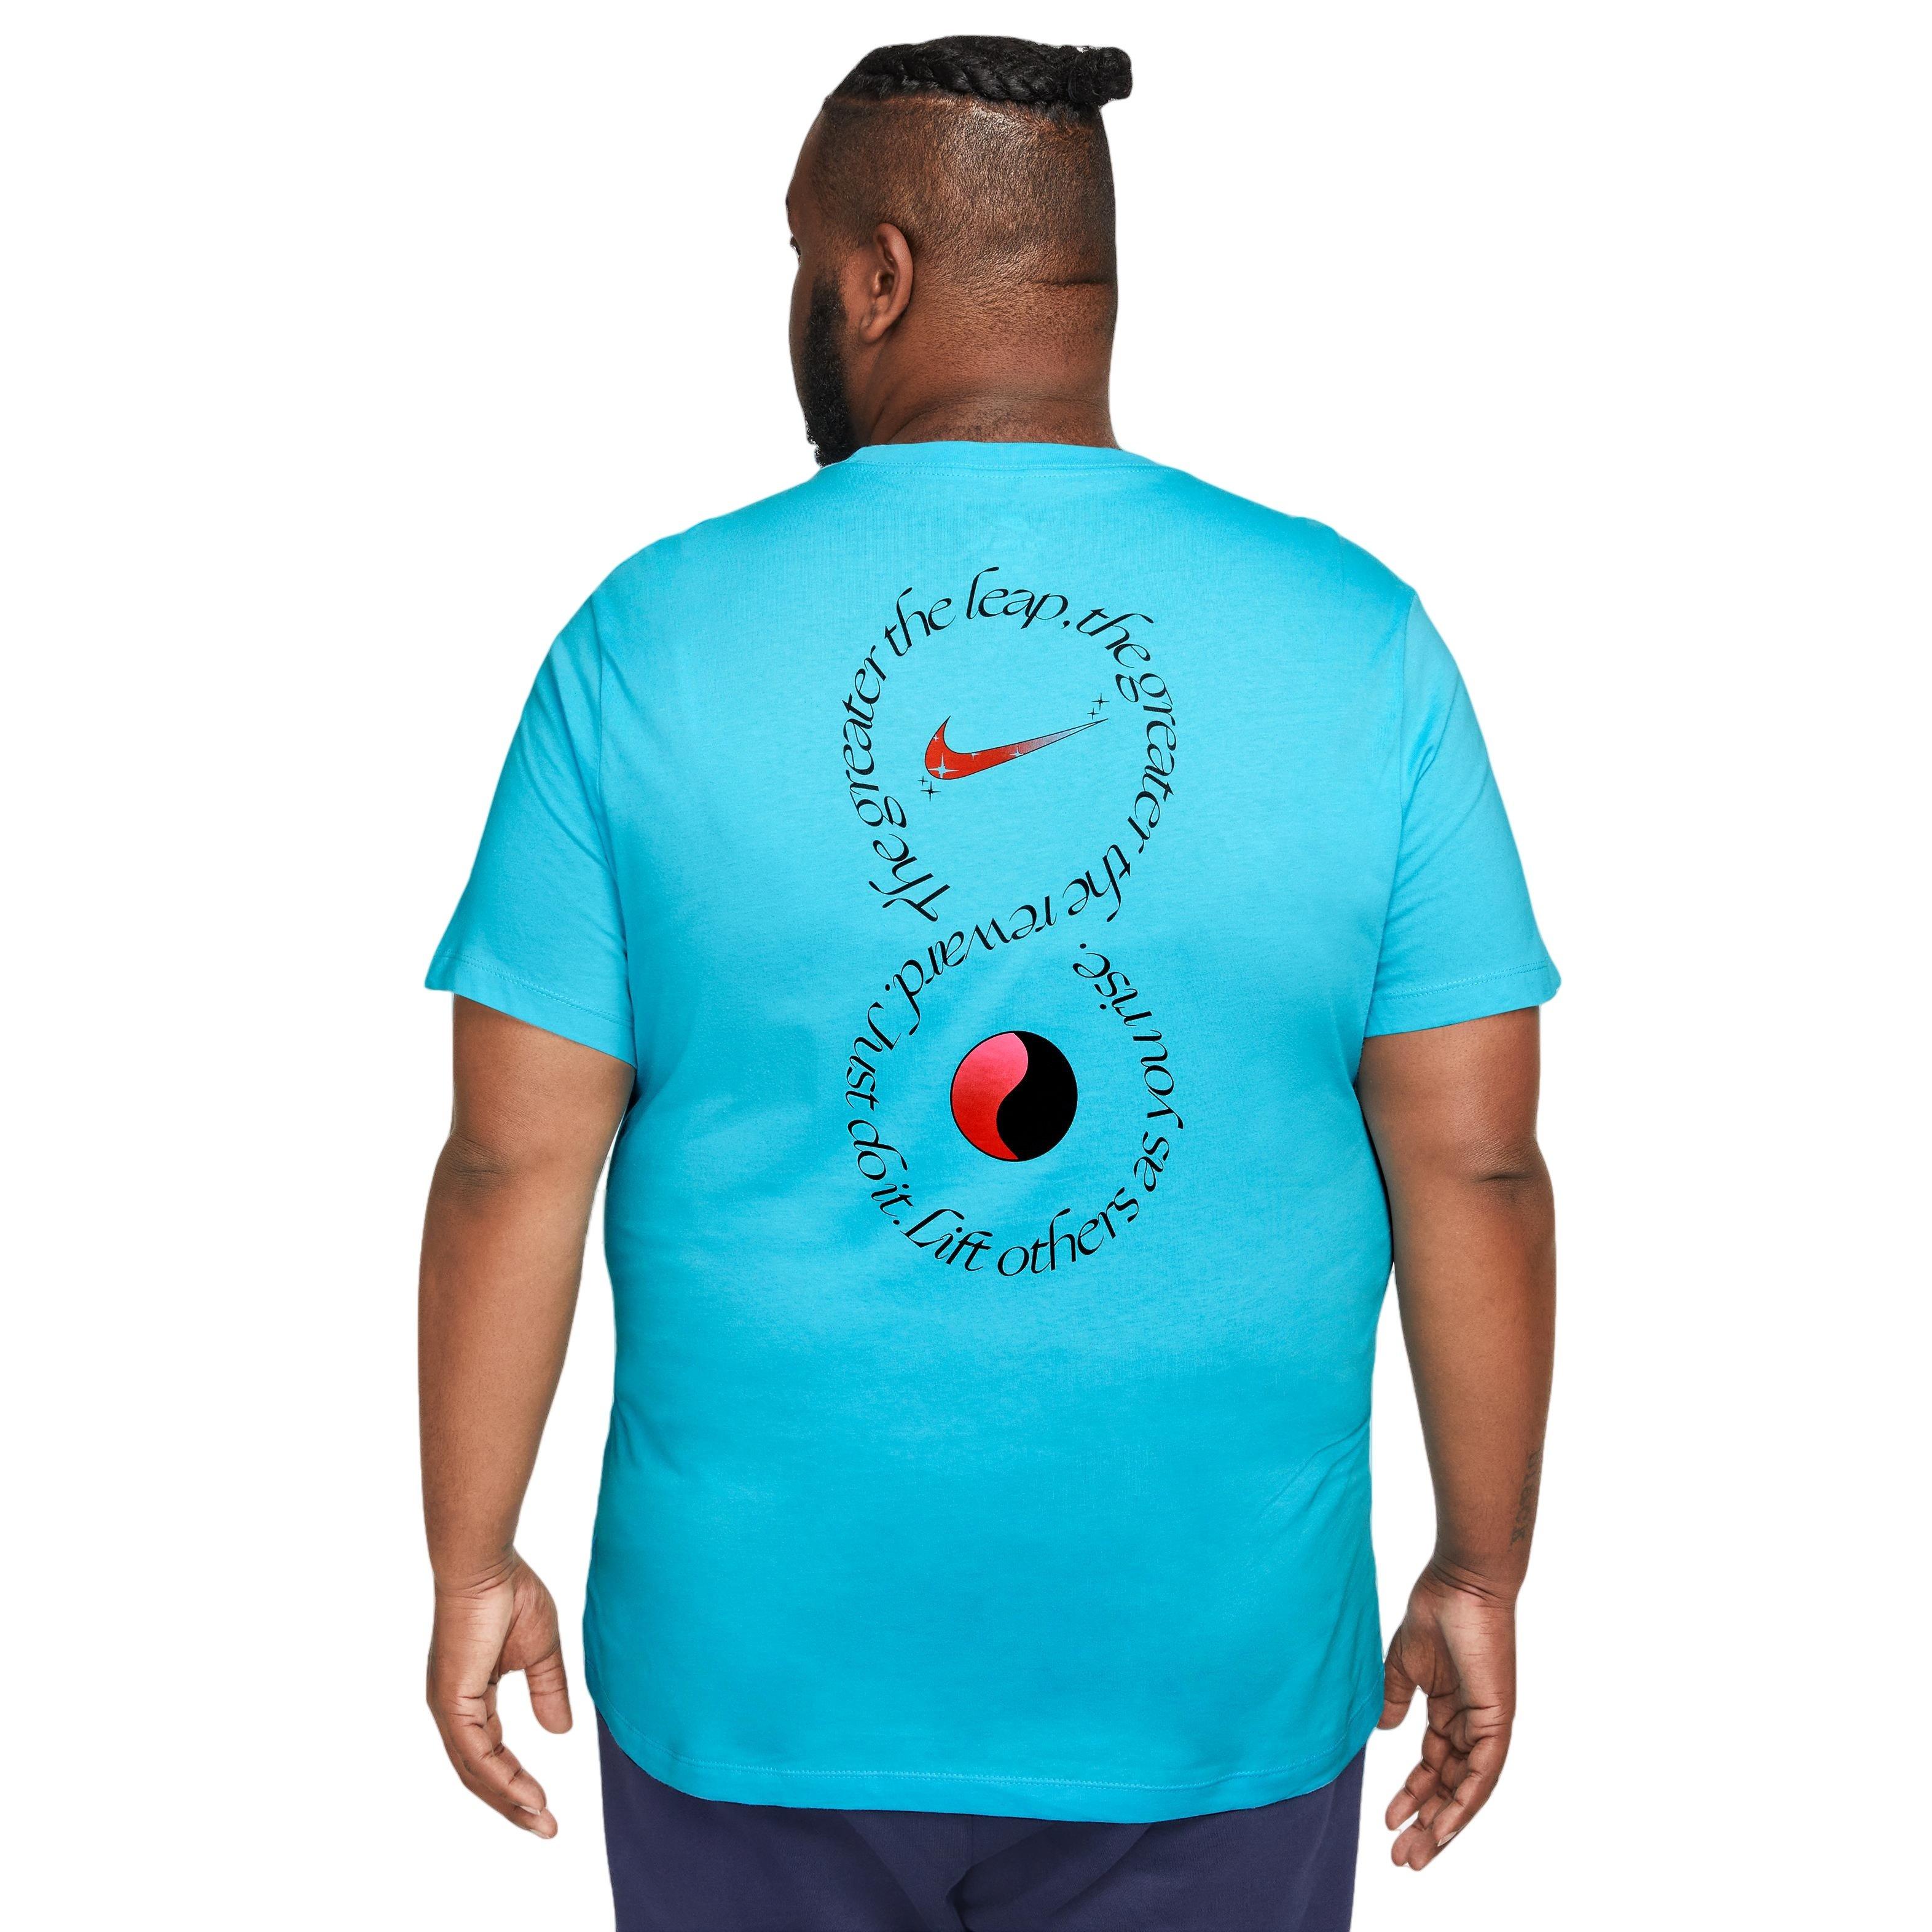 Nike Revolution IV Shirt s/s - Blue